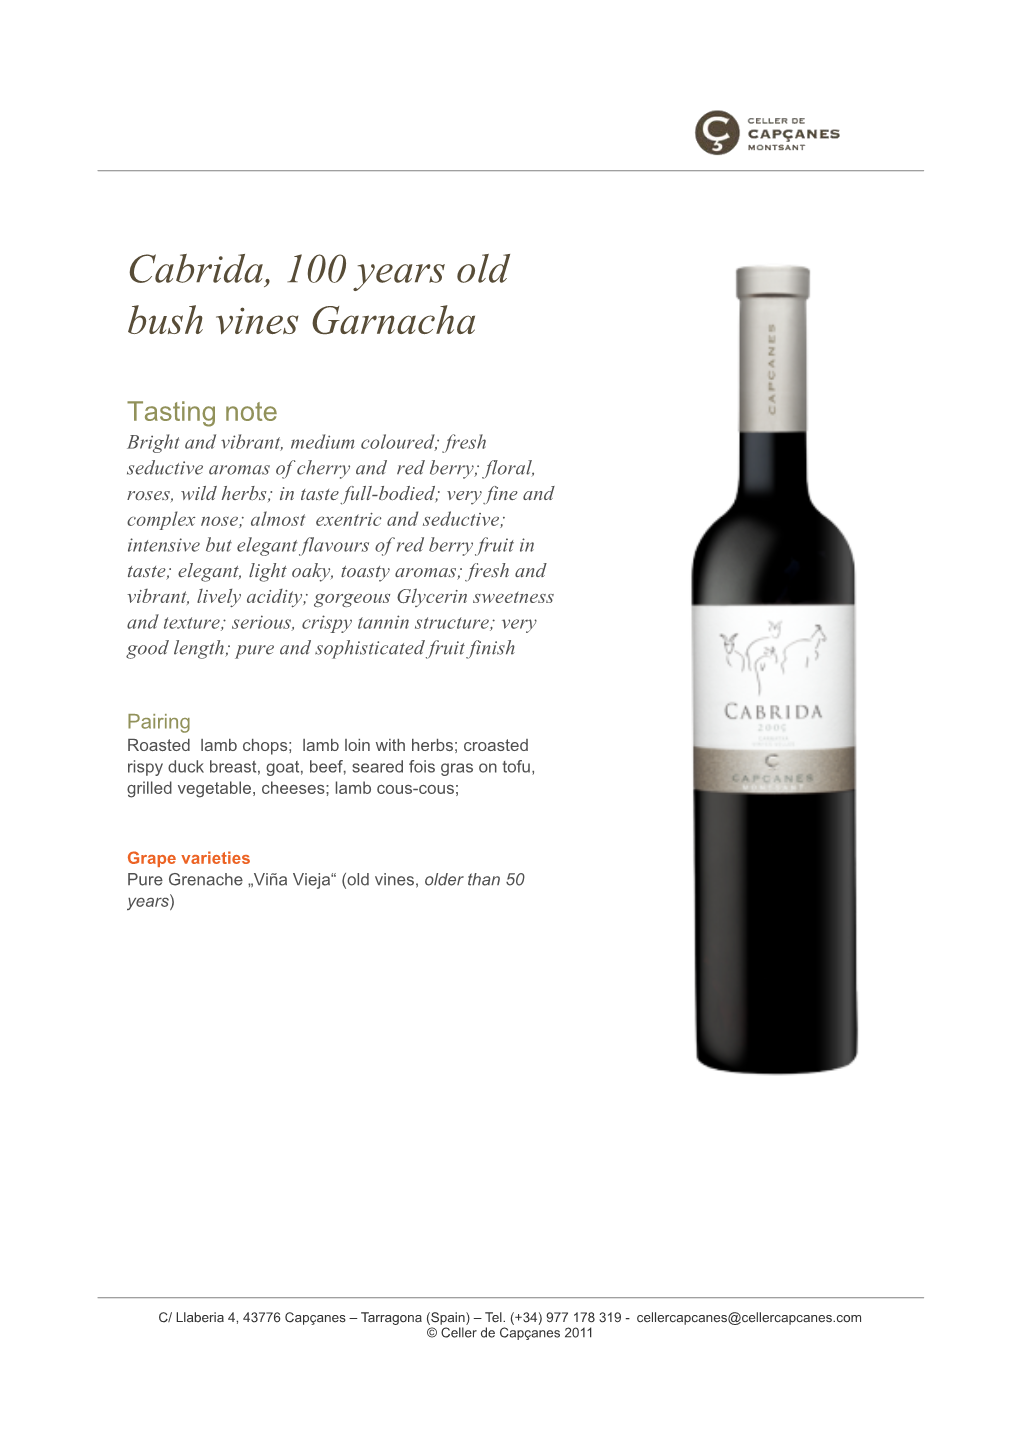 Cabrida, 100 Years Old Bush Vines Garnacha